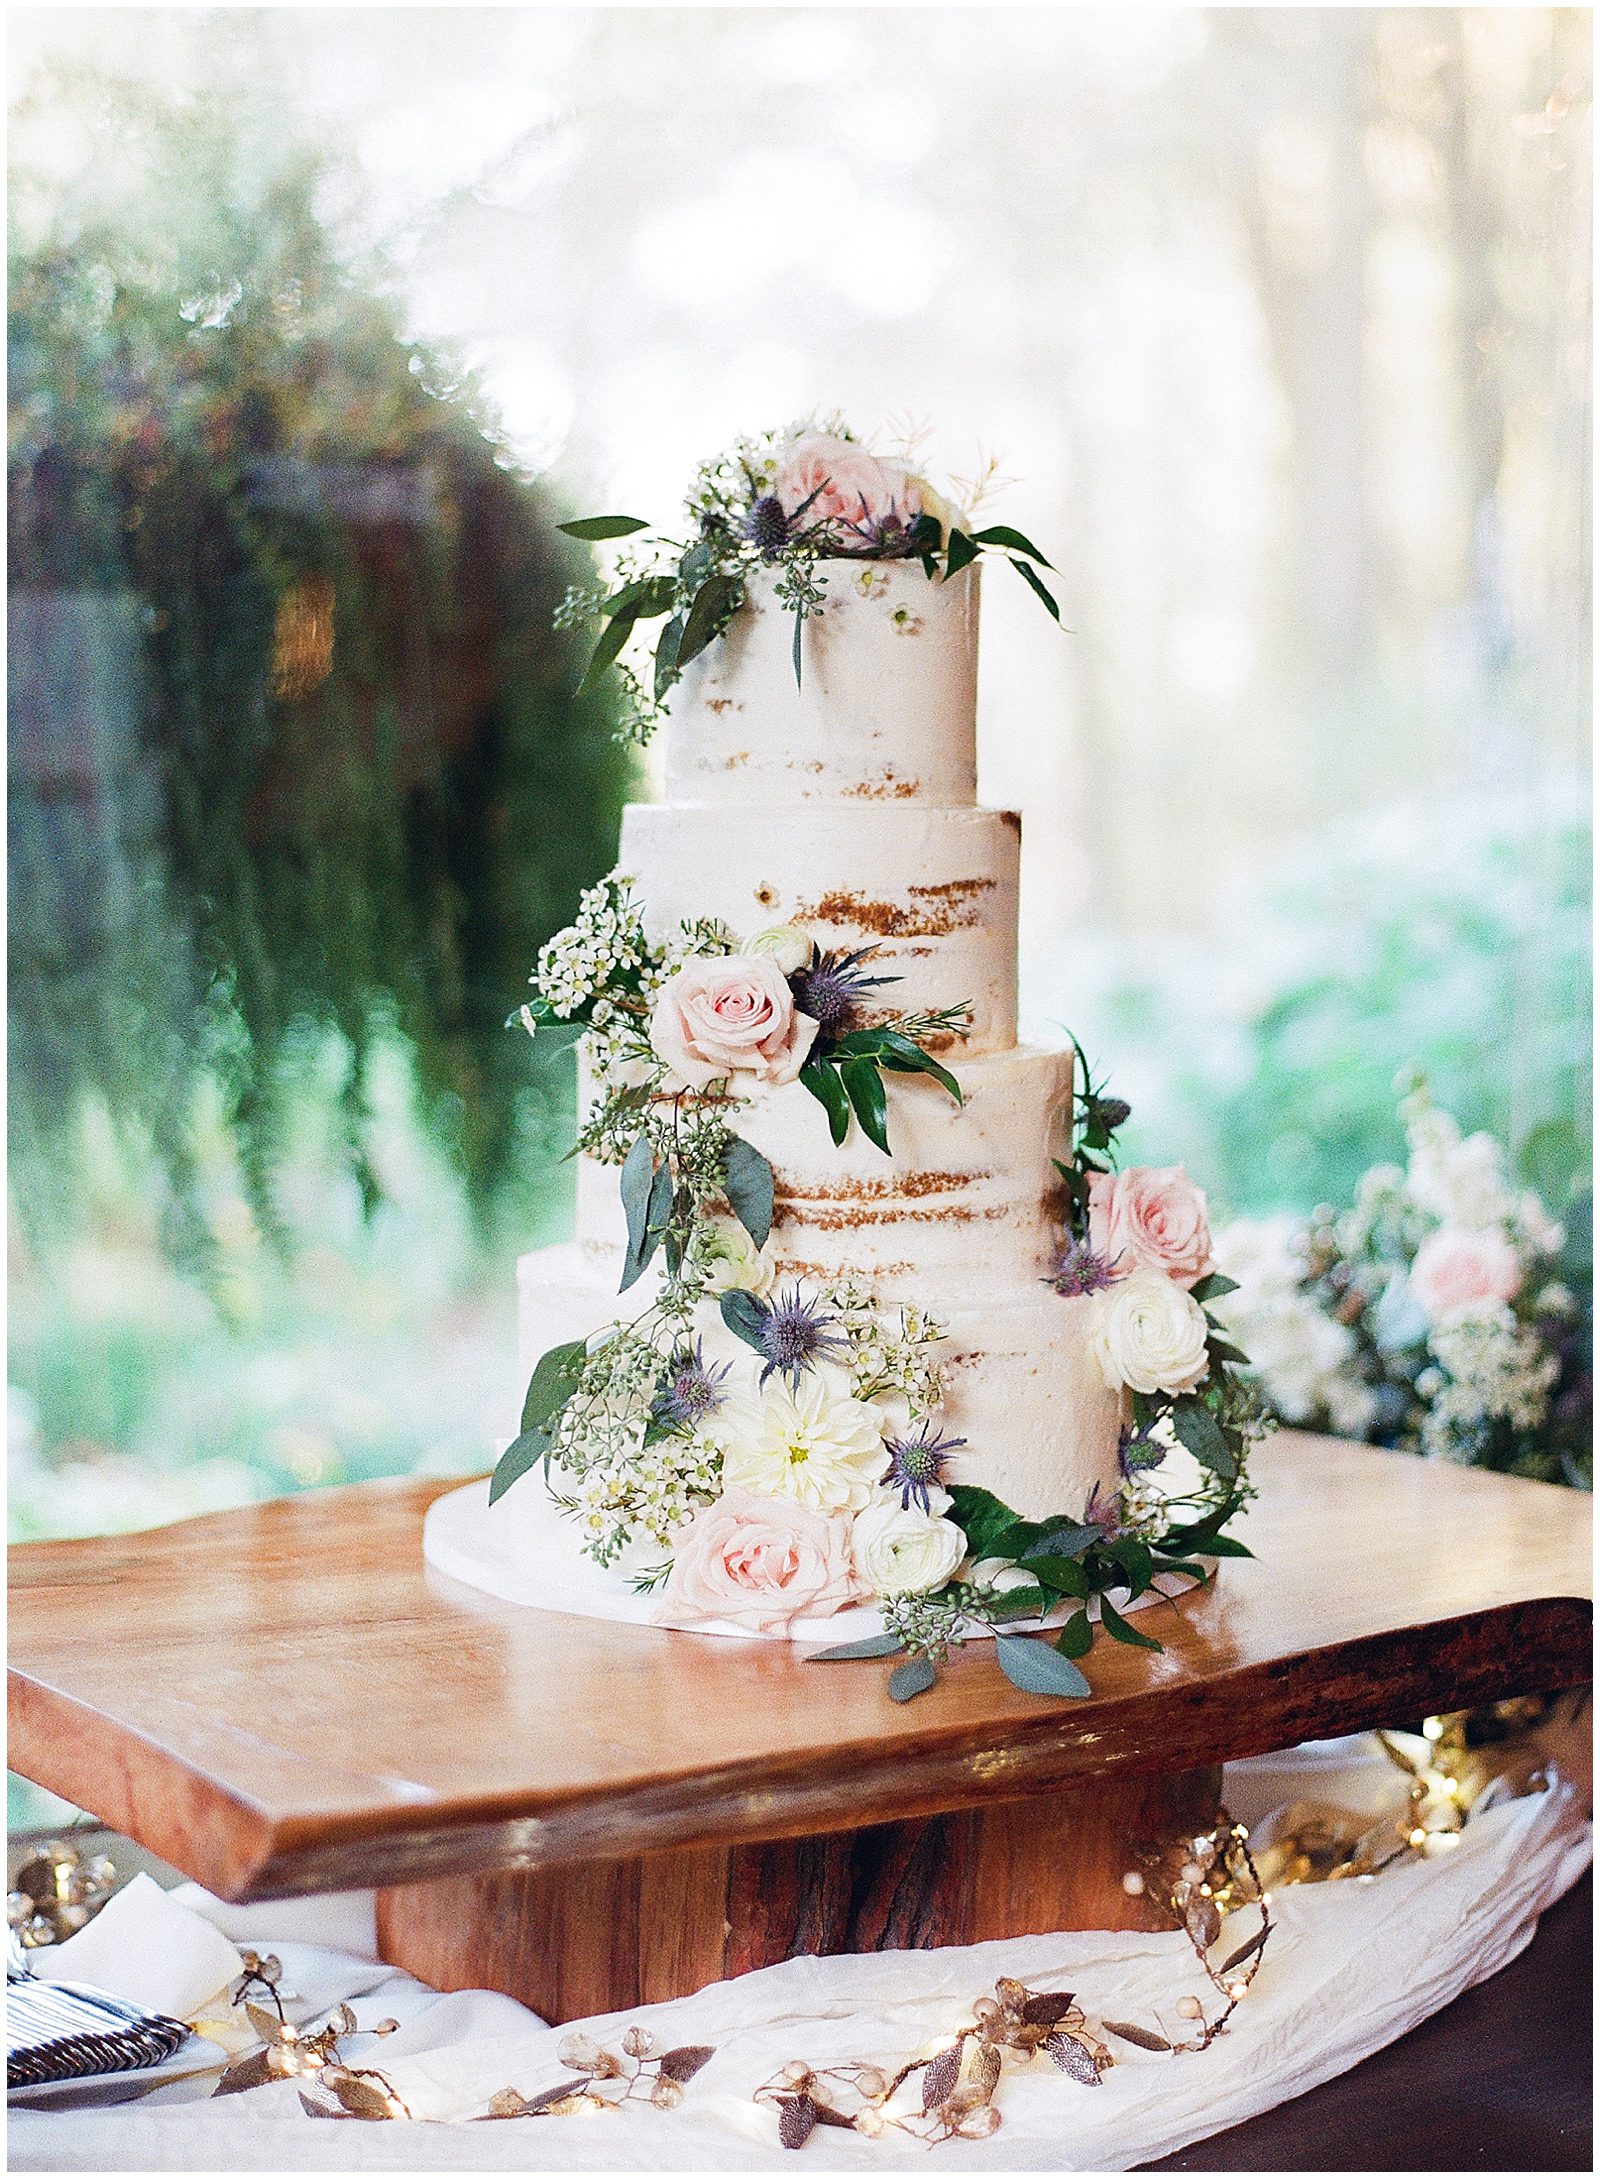 Wedding Cake with Flowers Photo